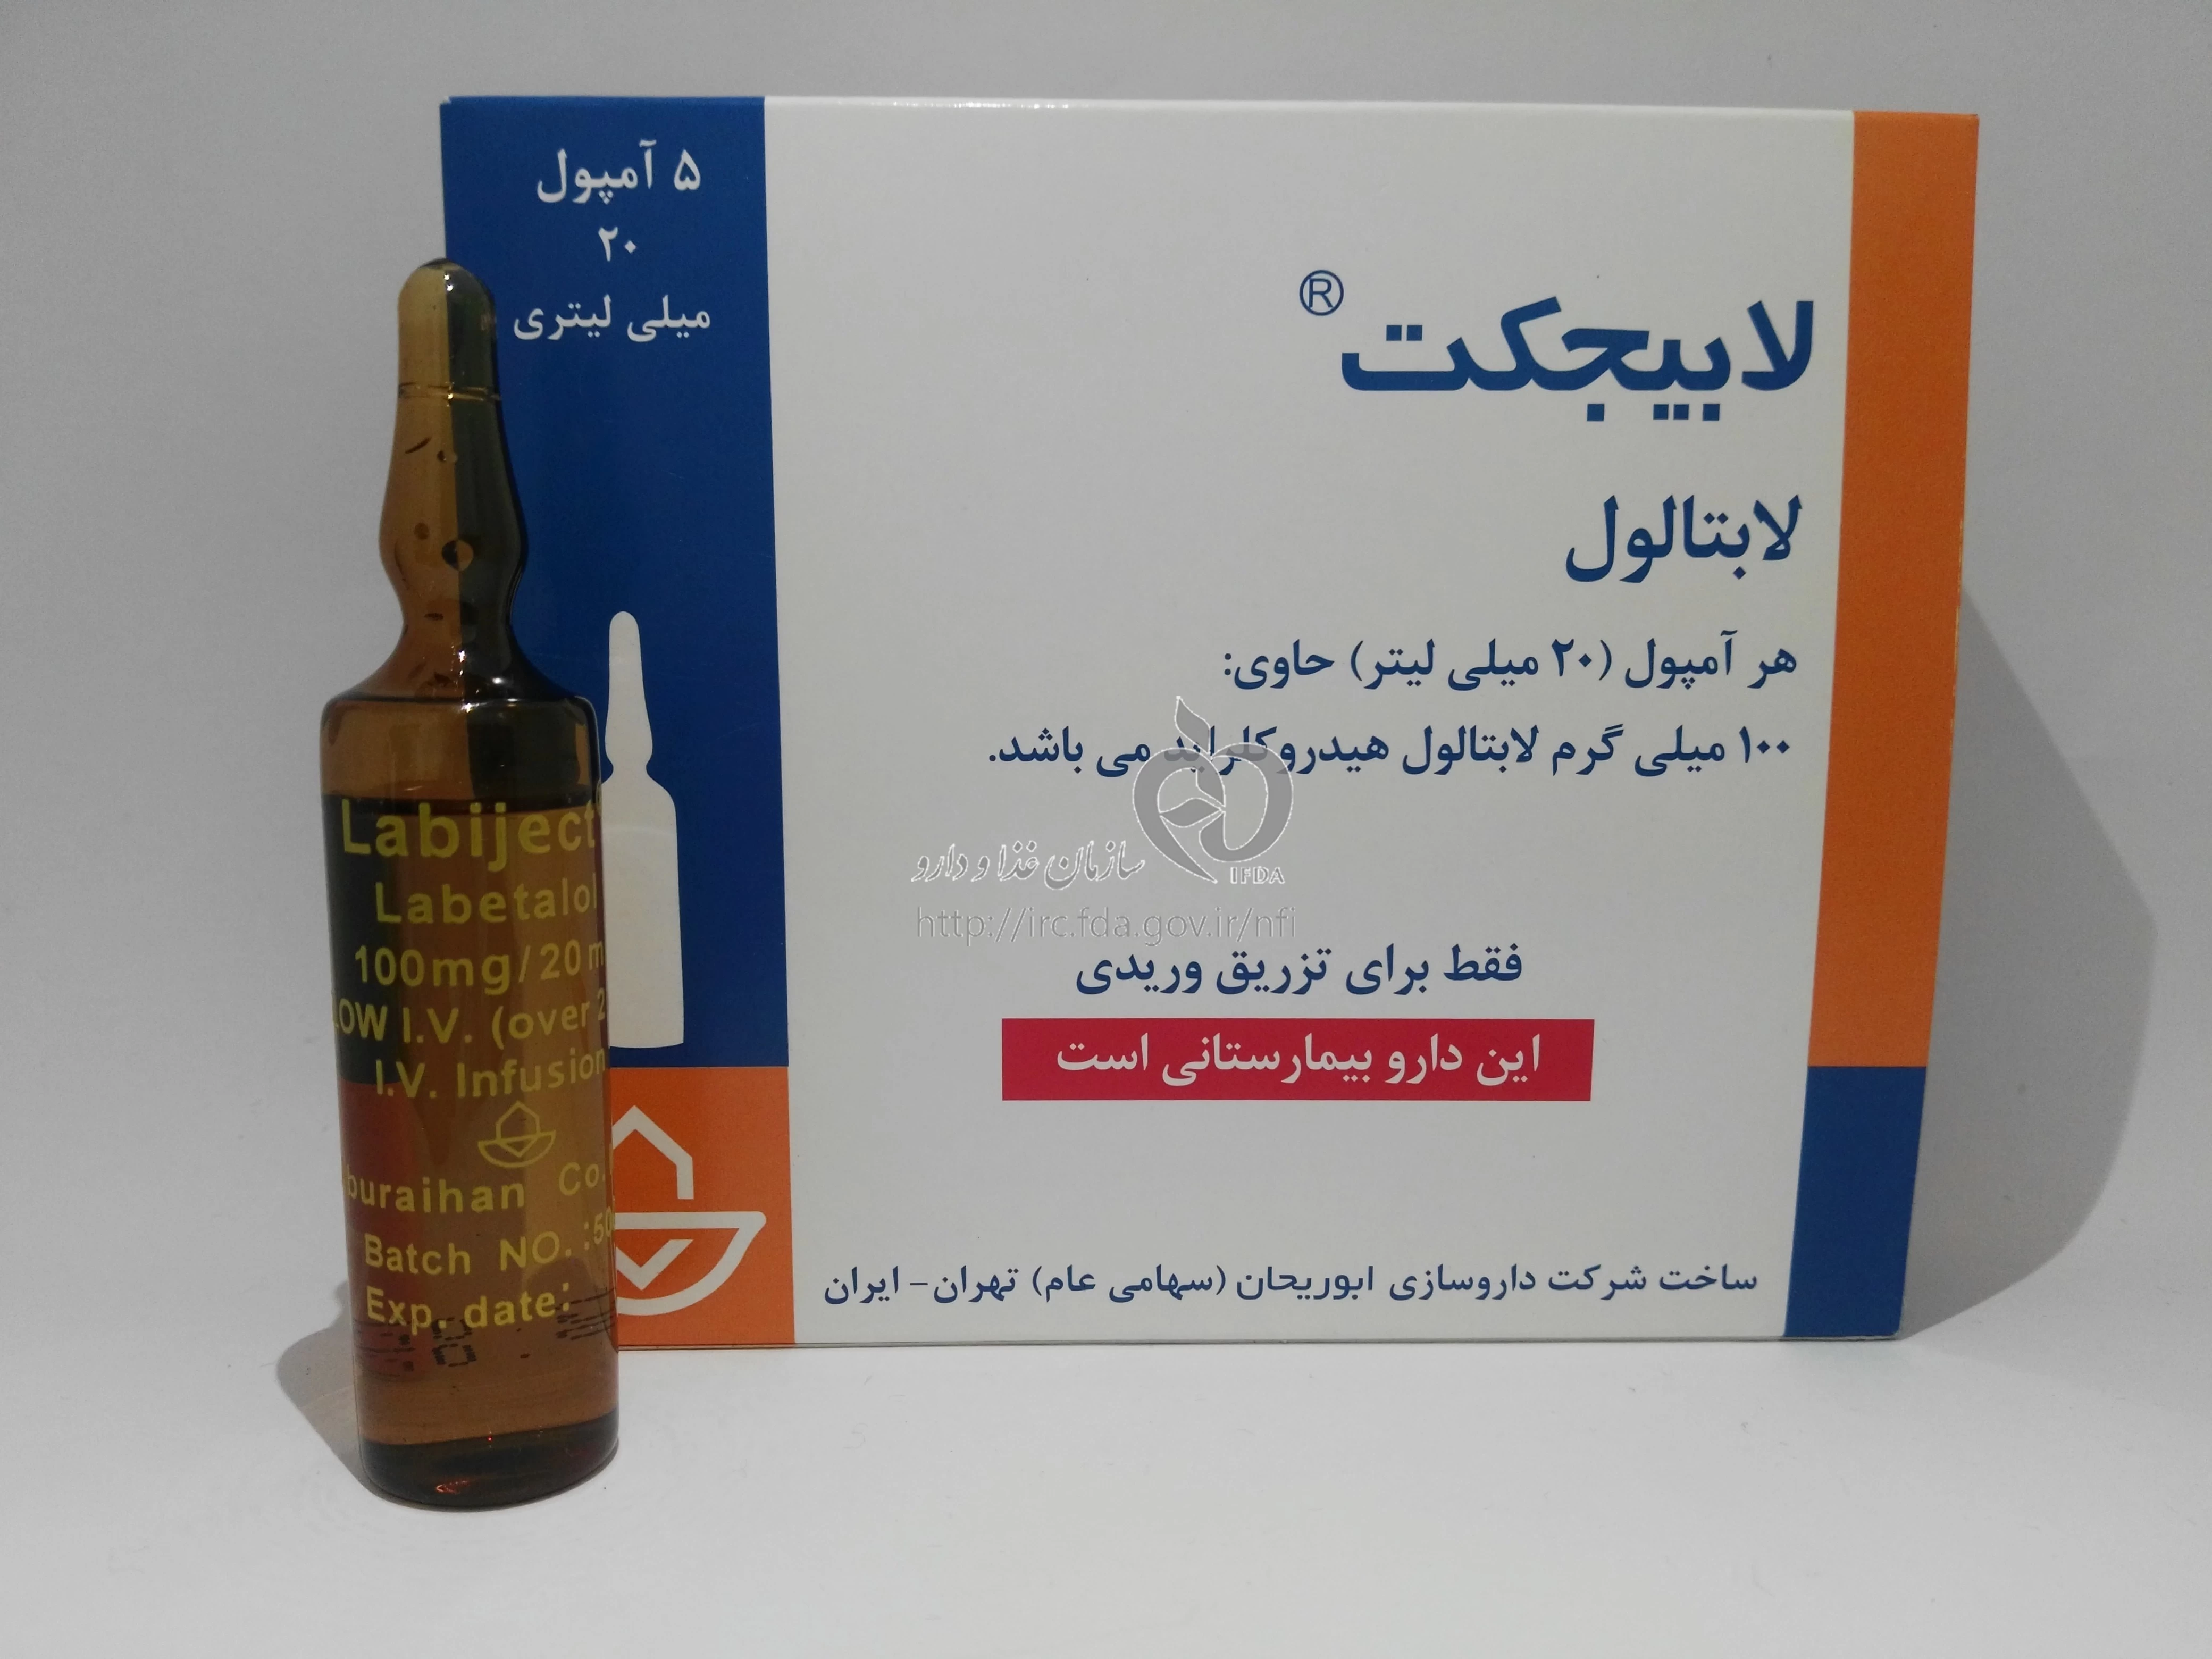 Labiject ®  Aburaihan Pharmaceutical Company